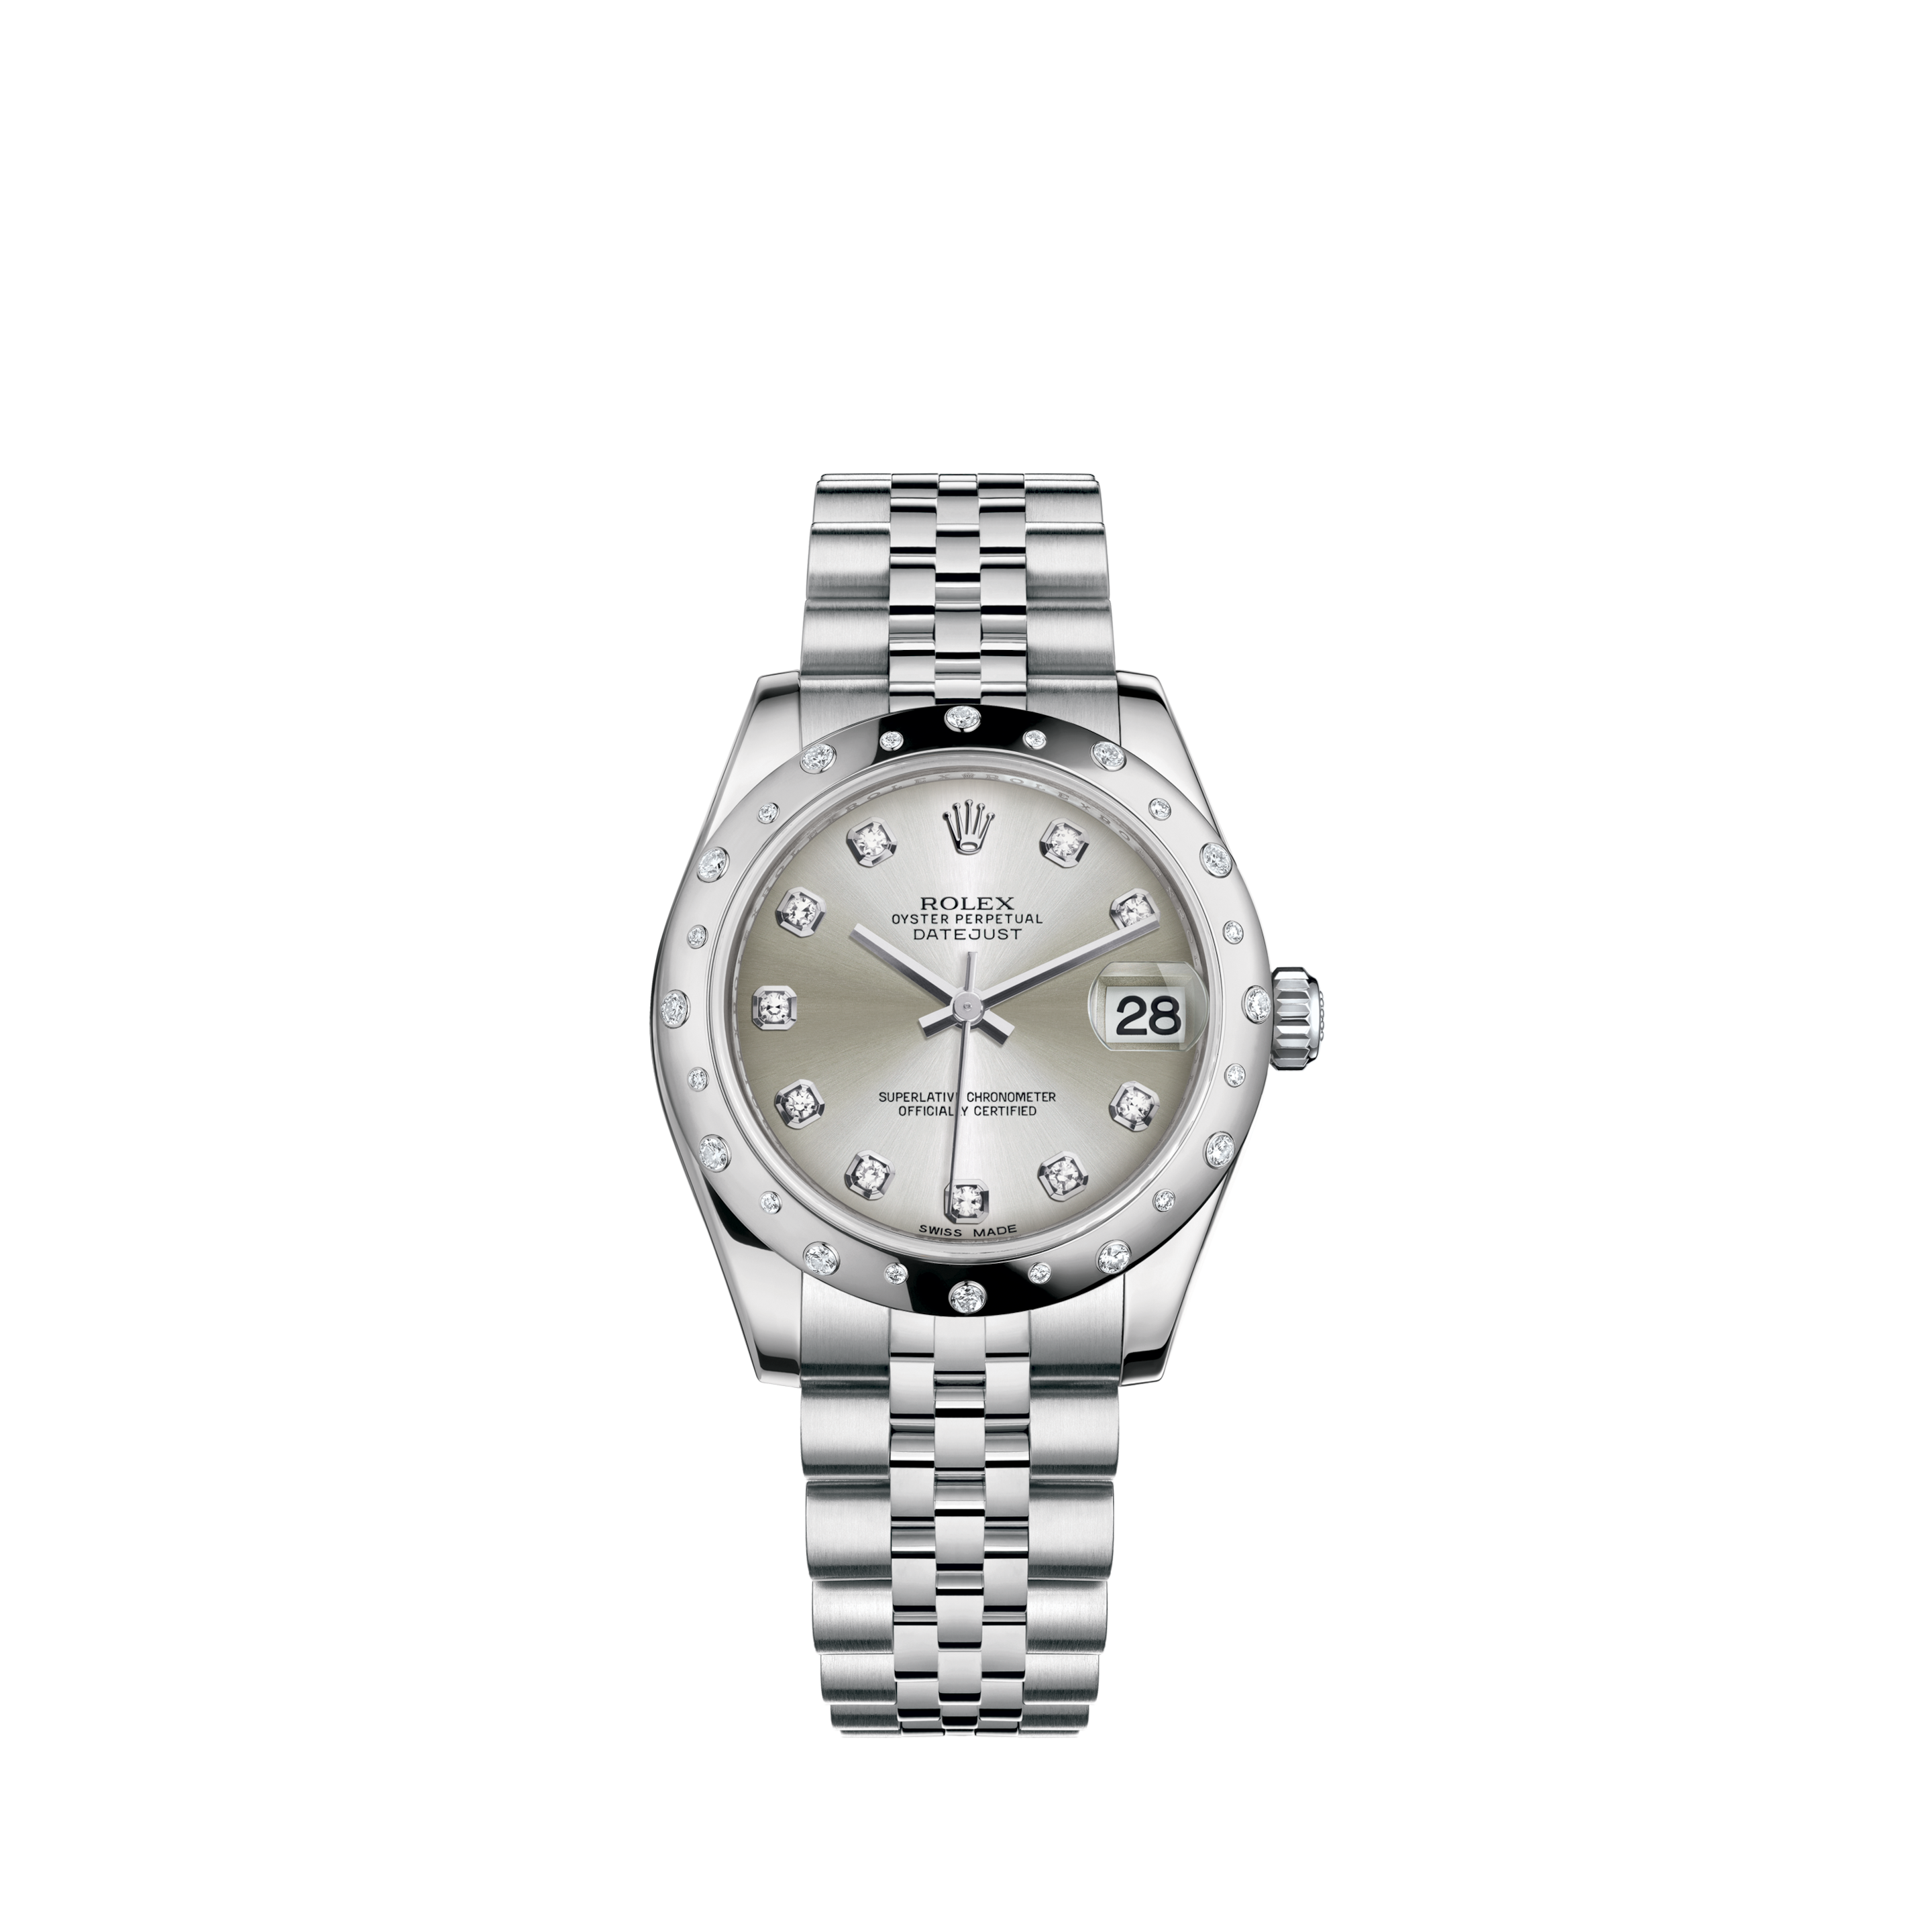 Rolex WatchEs Seeduer 16600 D Black Dial Calendar Function Stainless Steel SS Men's Watch